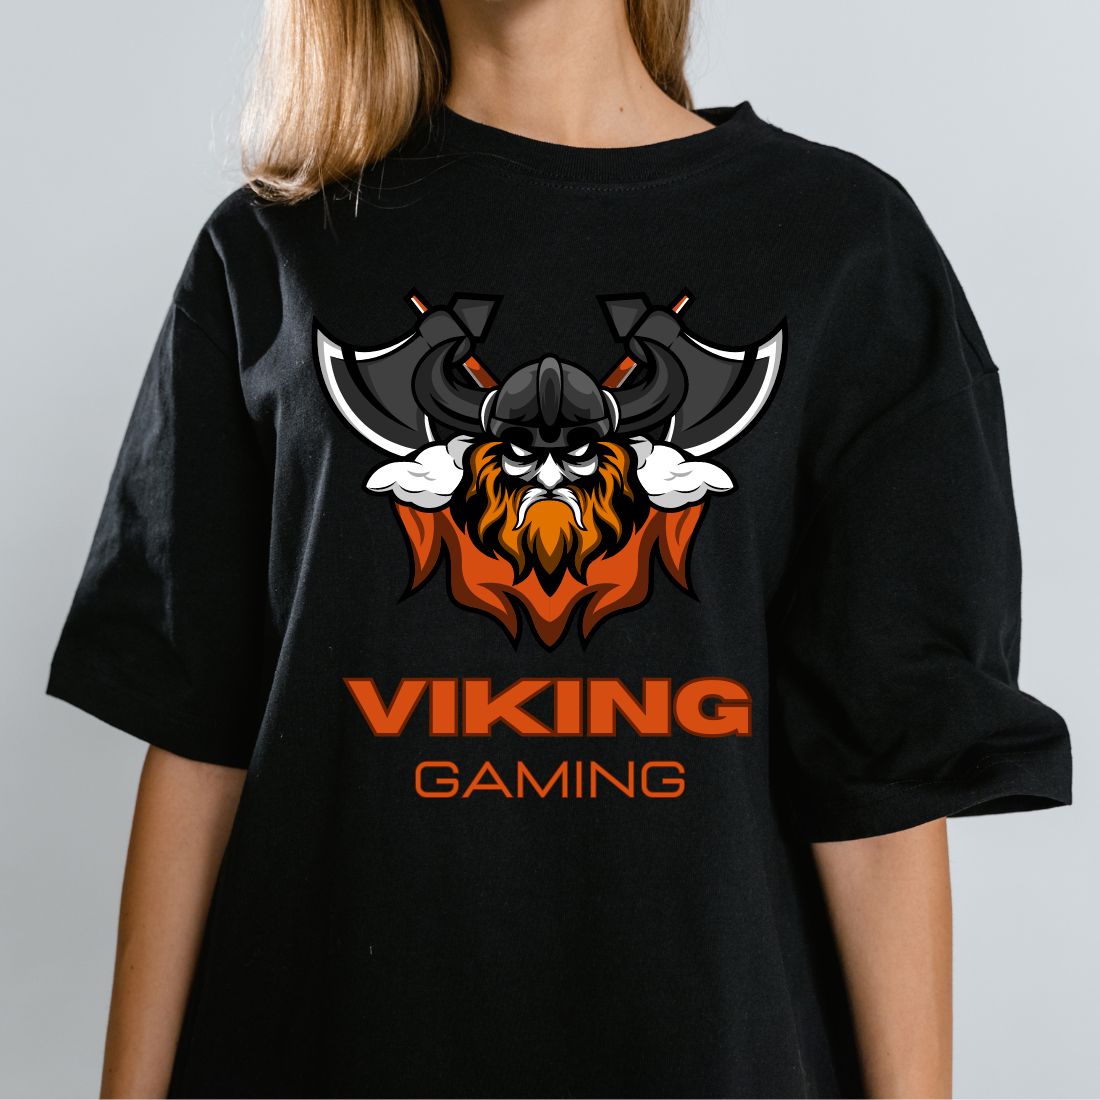 Viking Game design preview image.